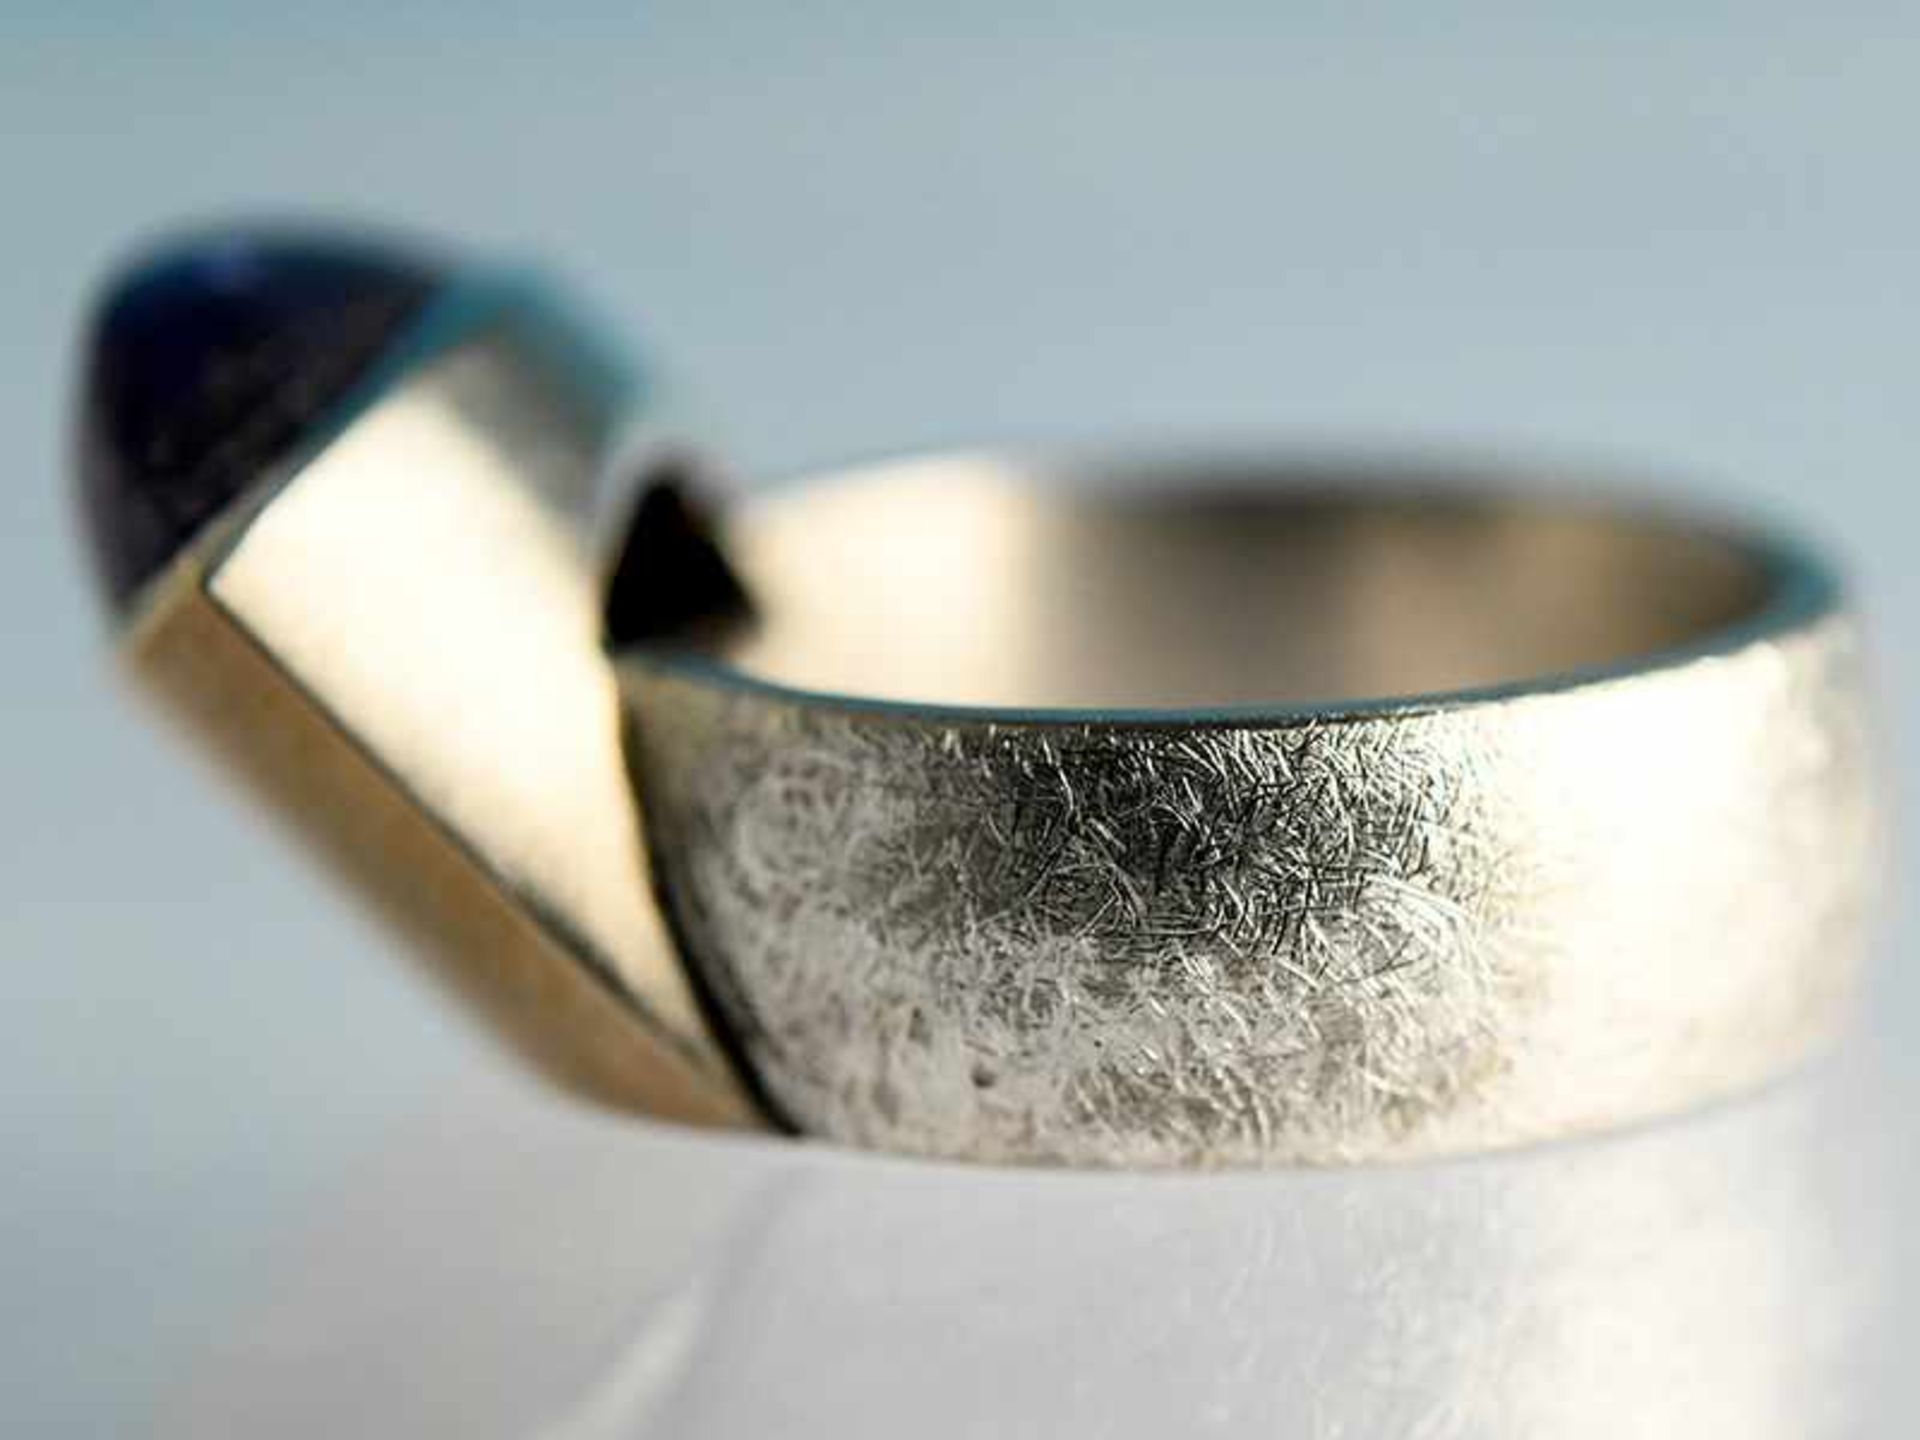 Moderner Ring mit Tansanit-Cabochon, Goldschmiedearbeit, 21. Jh. 925/- Silber und 585/- Gelbgold. - Image 7 of 7